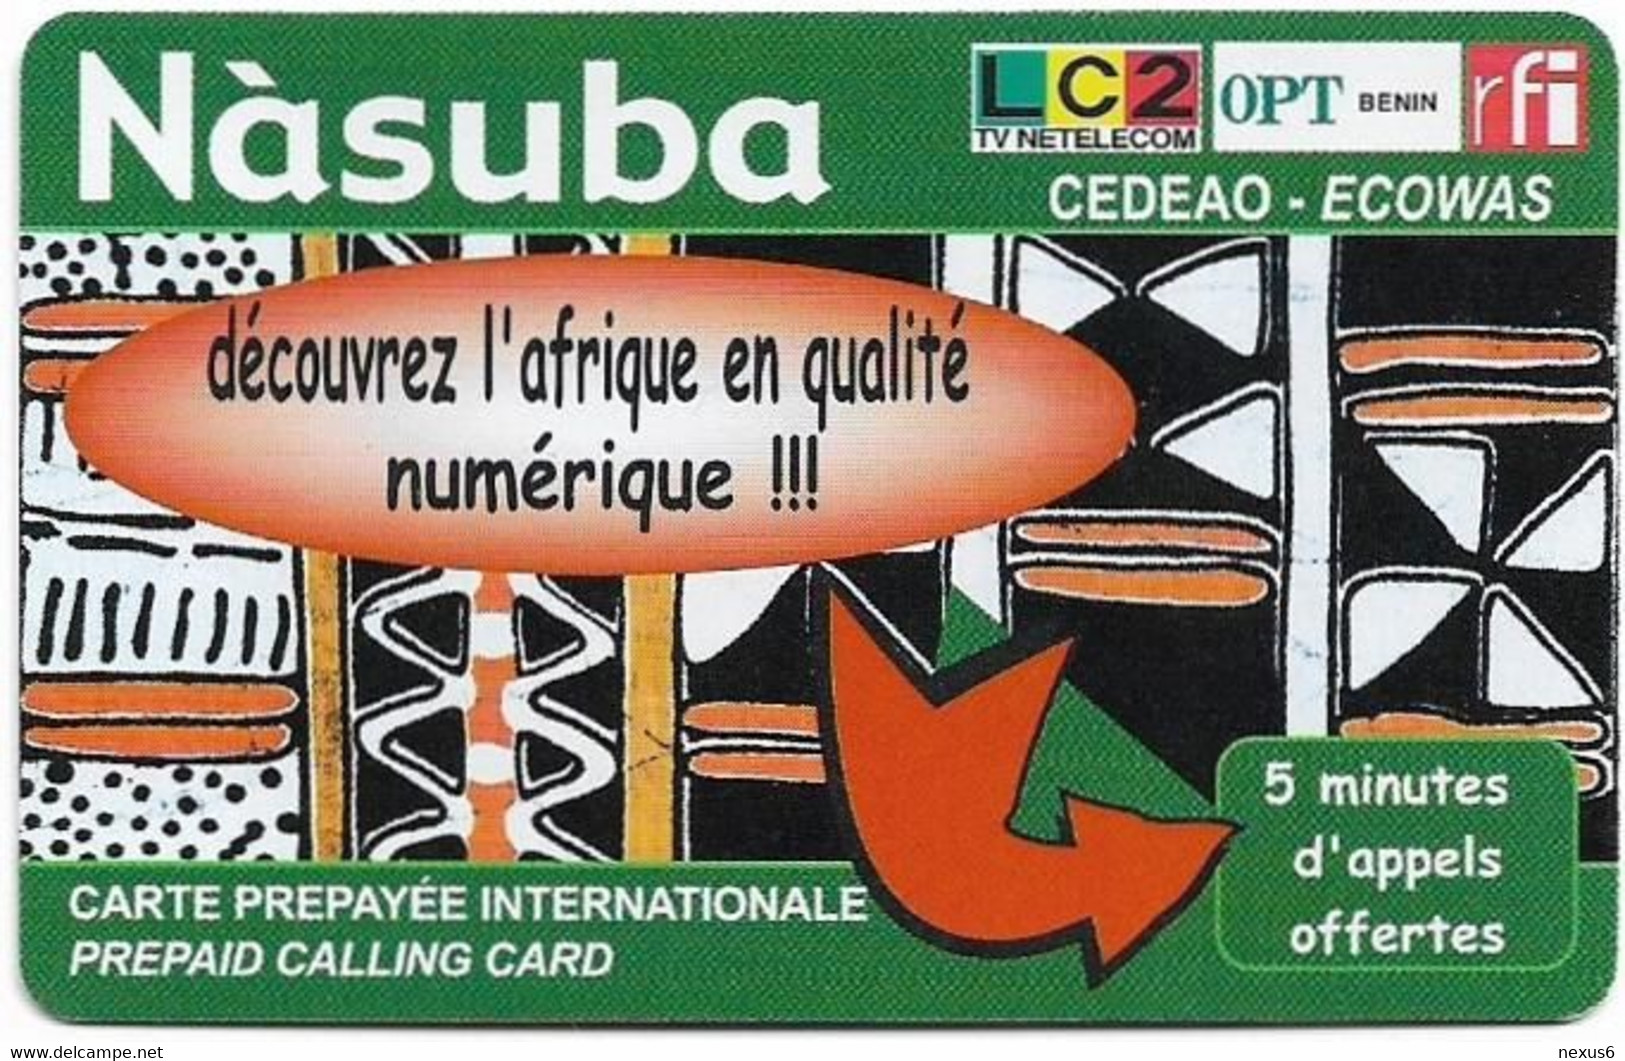 Benin - LC2 - Nàsuba - Cedeao-Ecowas (Green) - Exp.31.12.2003, Remote Mem. 5min., Used - Bénin